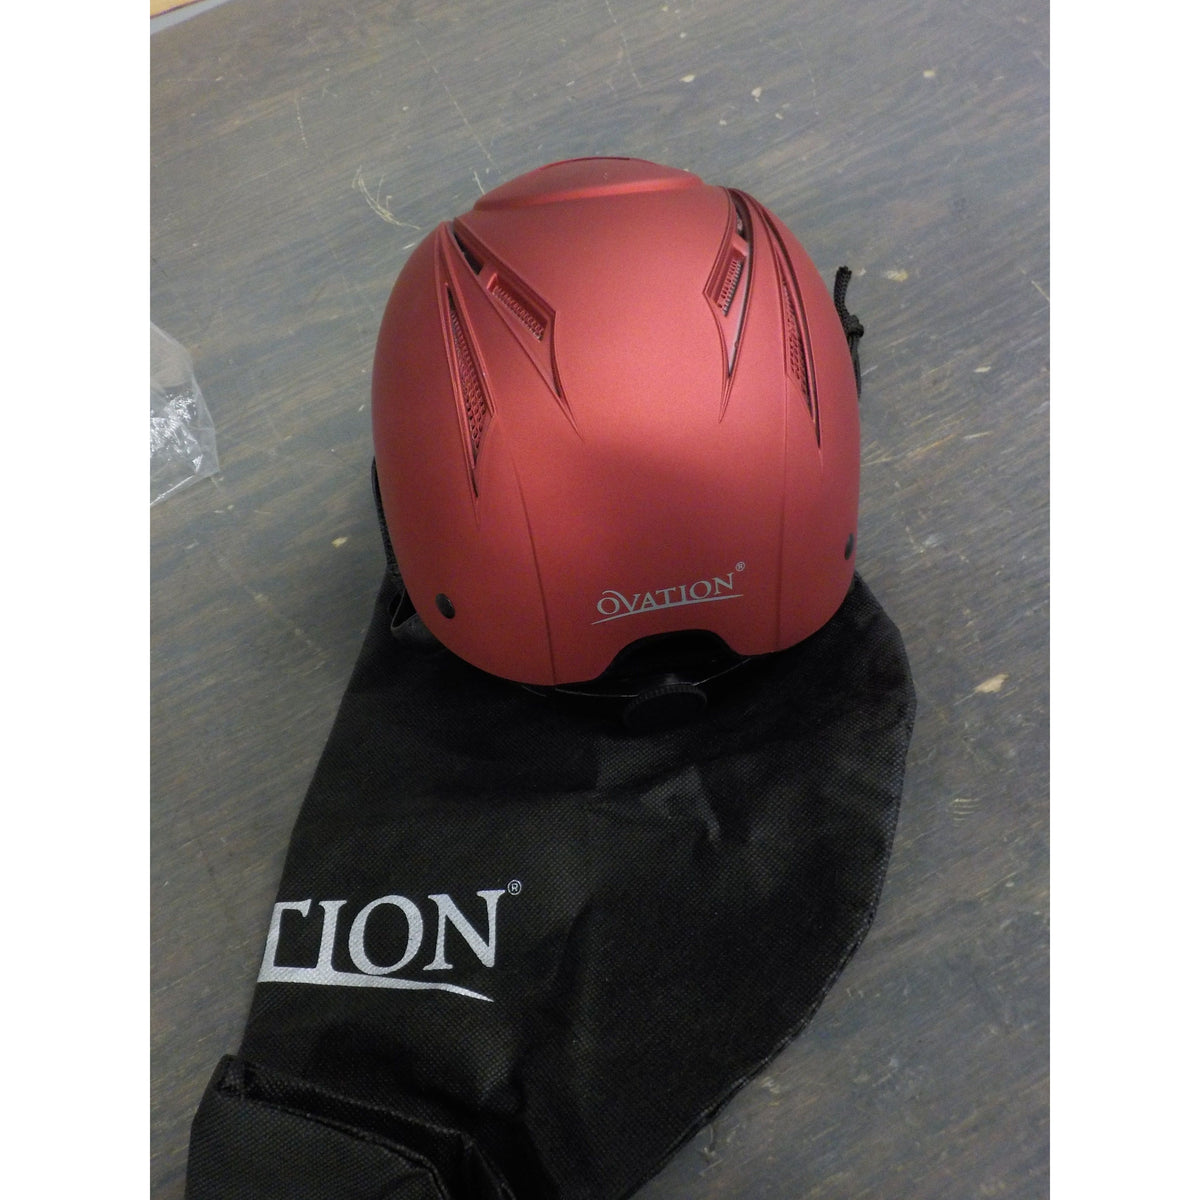 Ovation Metallic Schooler Helmet - Red - X-Small/Small - Used